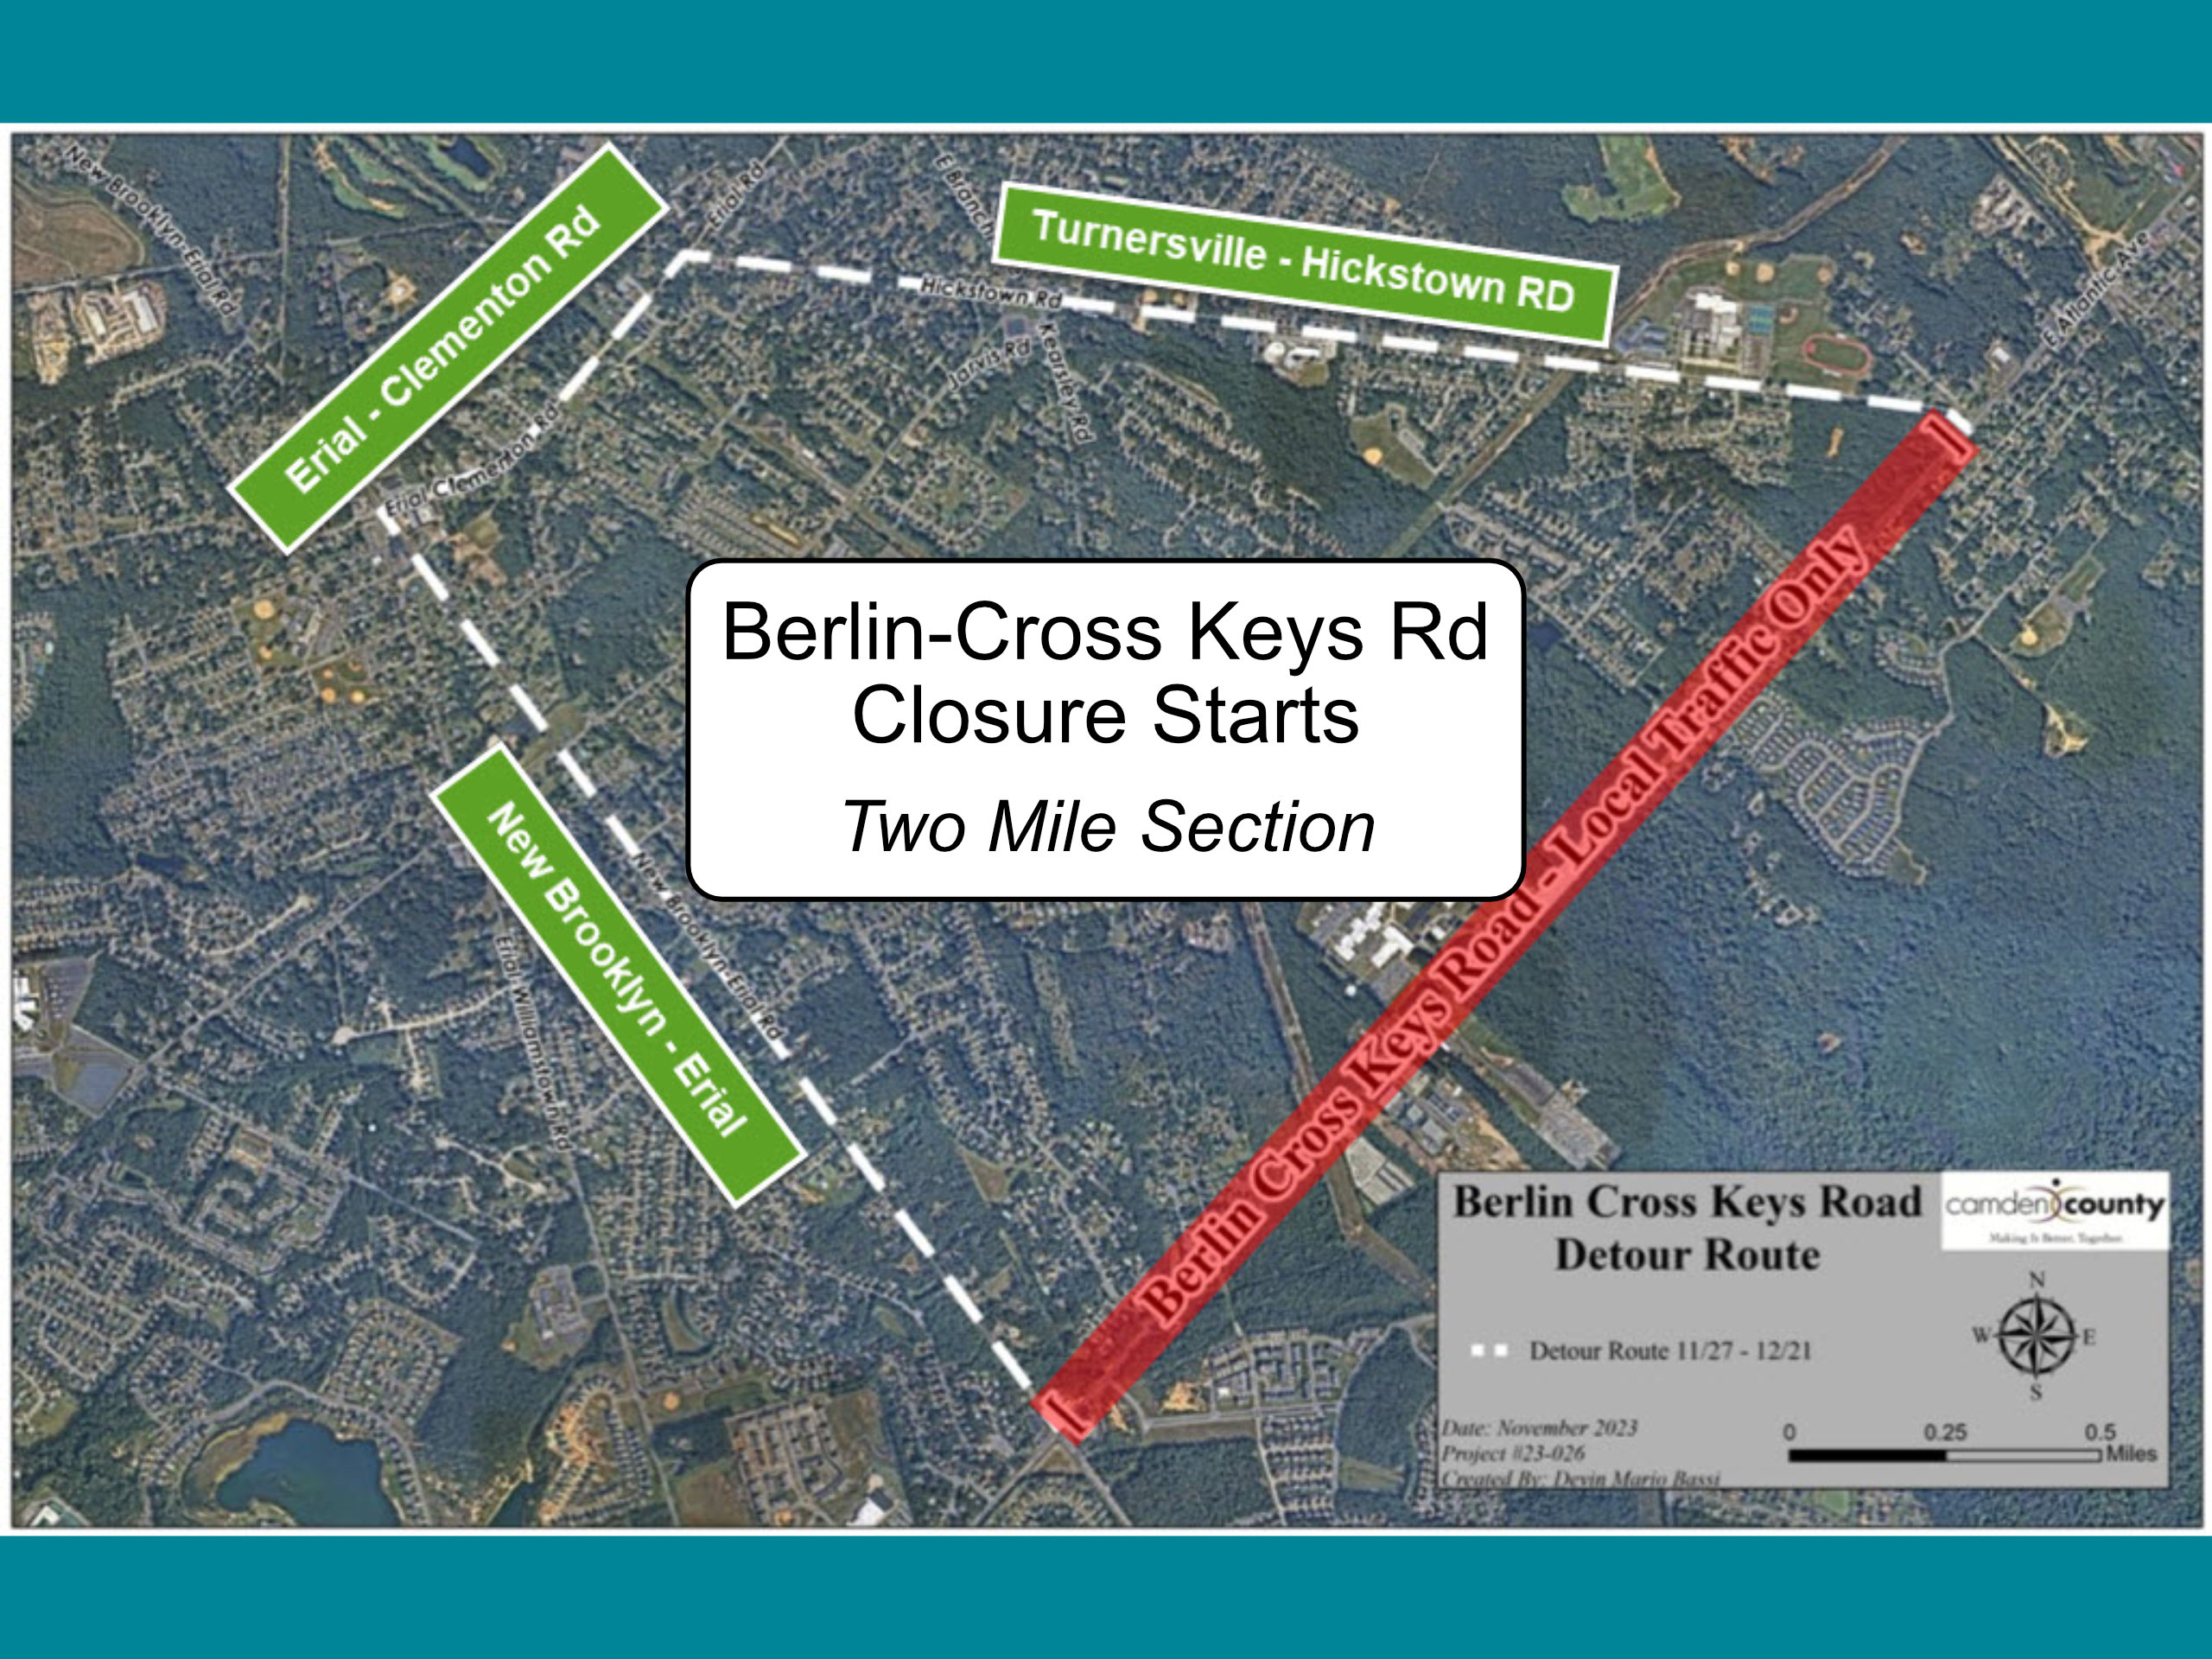 Three Week Closure for Two Mile Section of Berlin-Cross Keys Road Starts -  42 Freeway